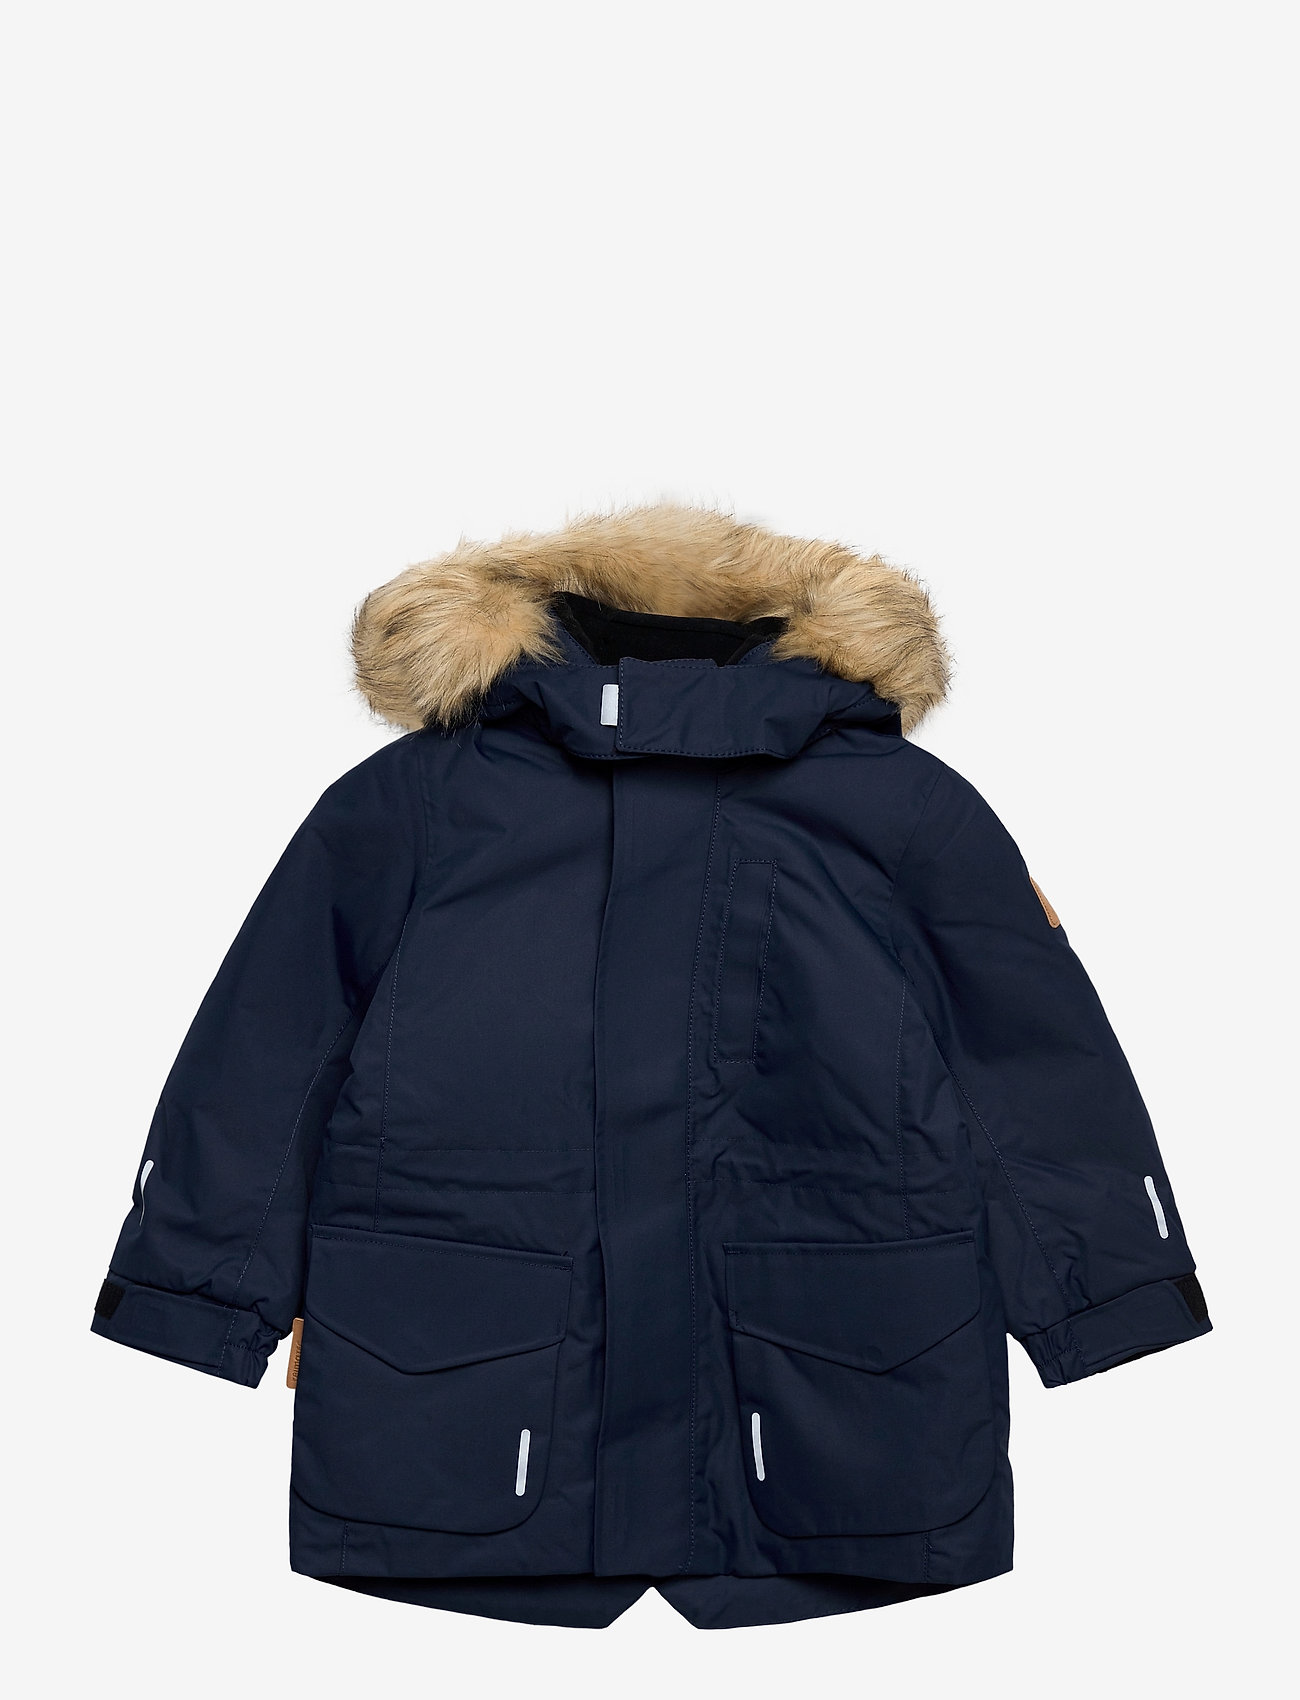 Reima - Kids' winter parka Naapuri - insulated jackets - navy - 0